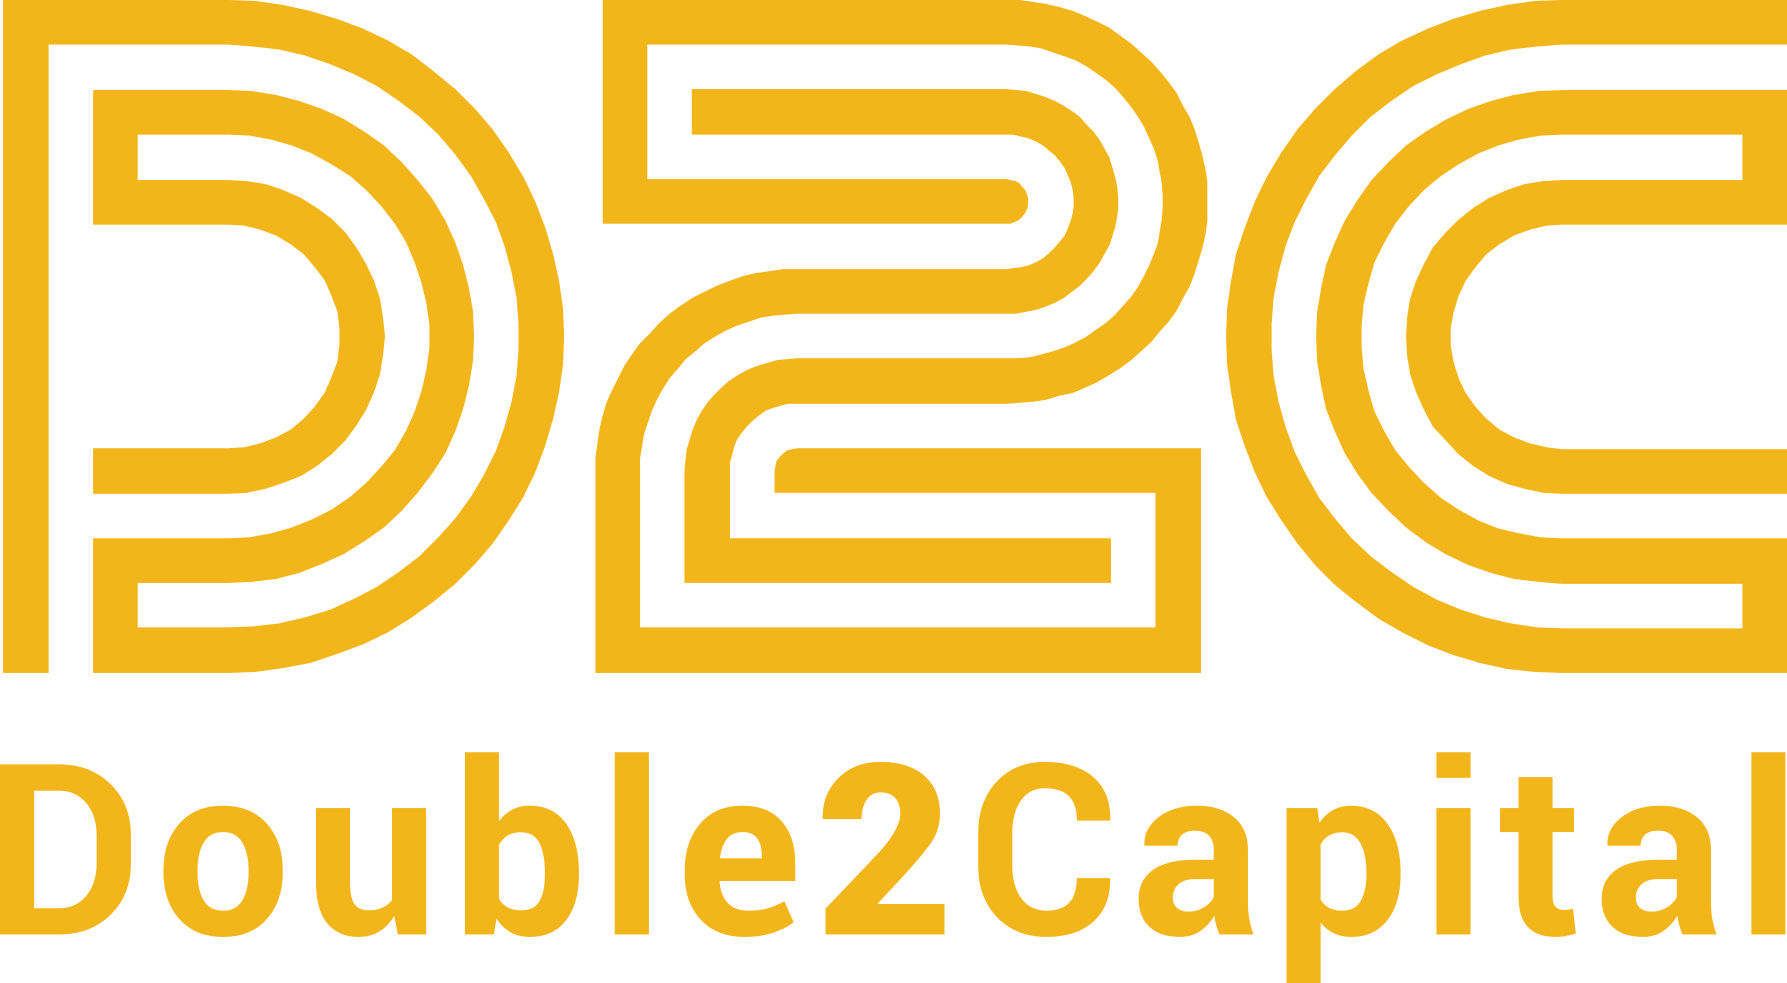 Double 2 Capital